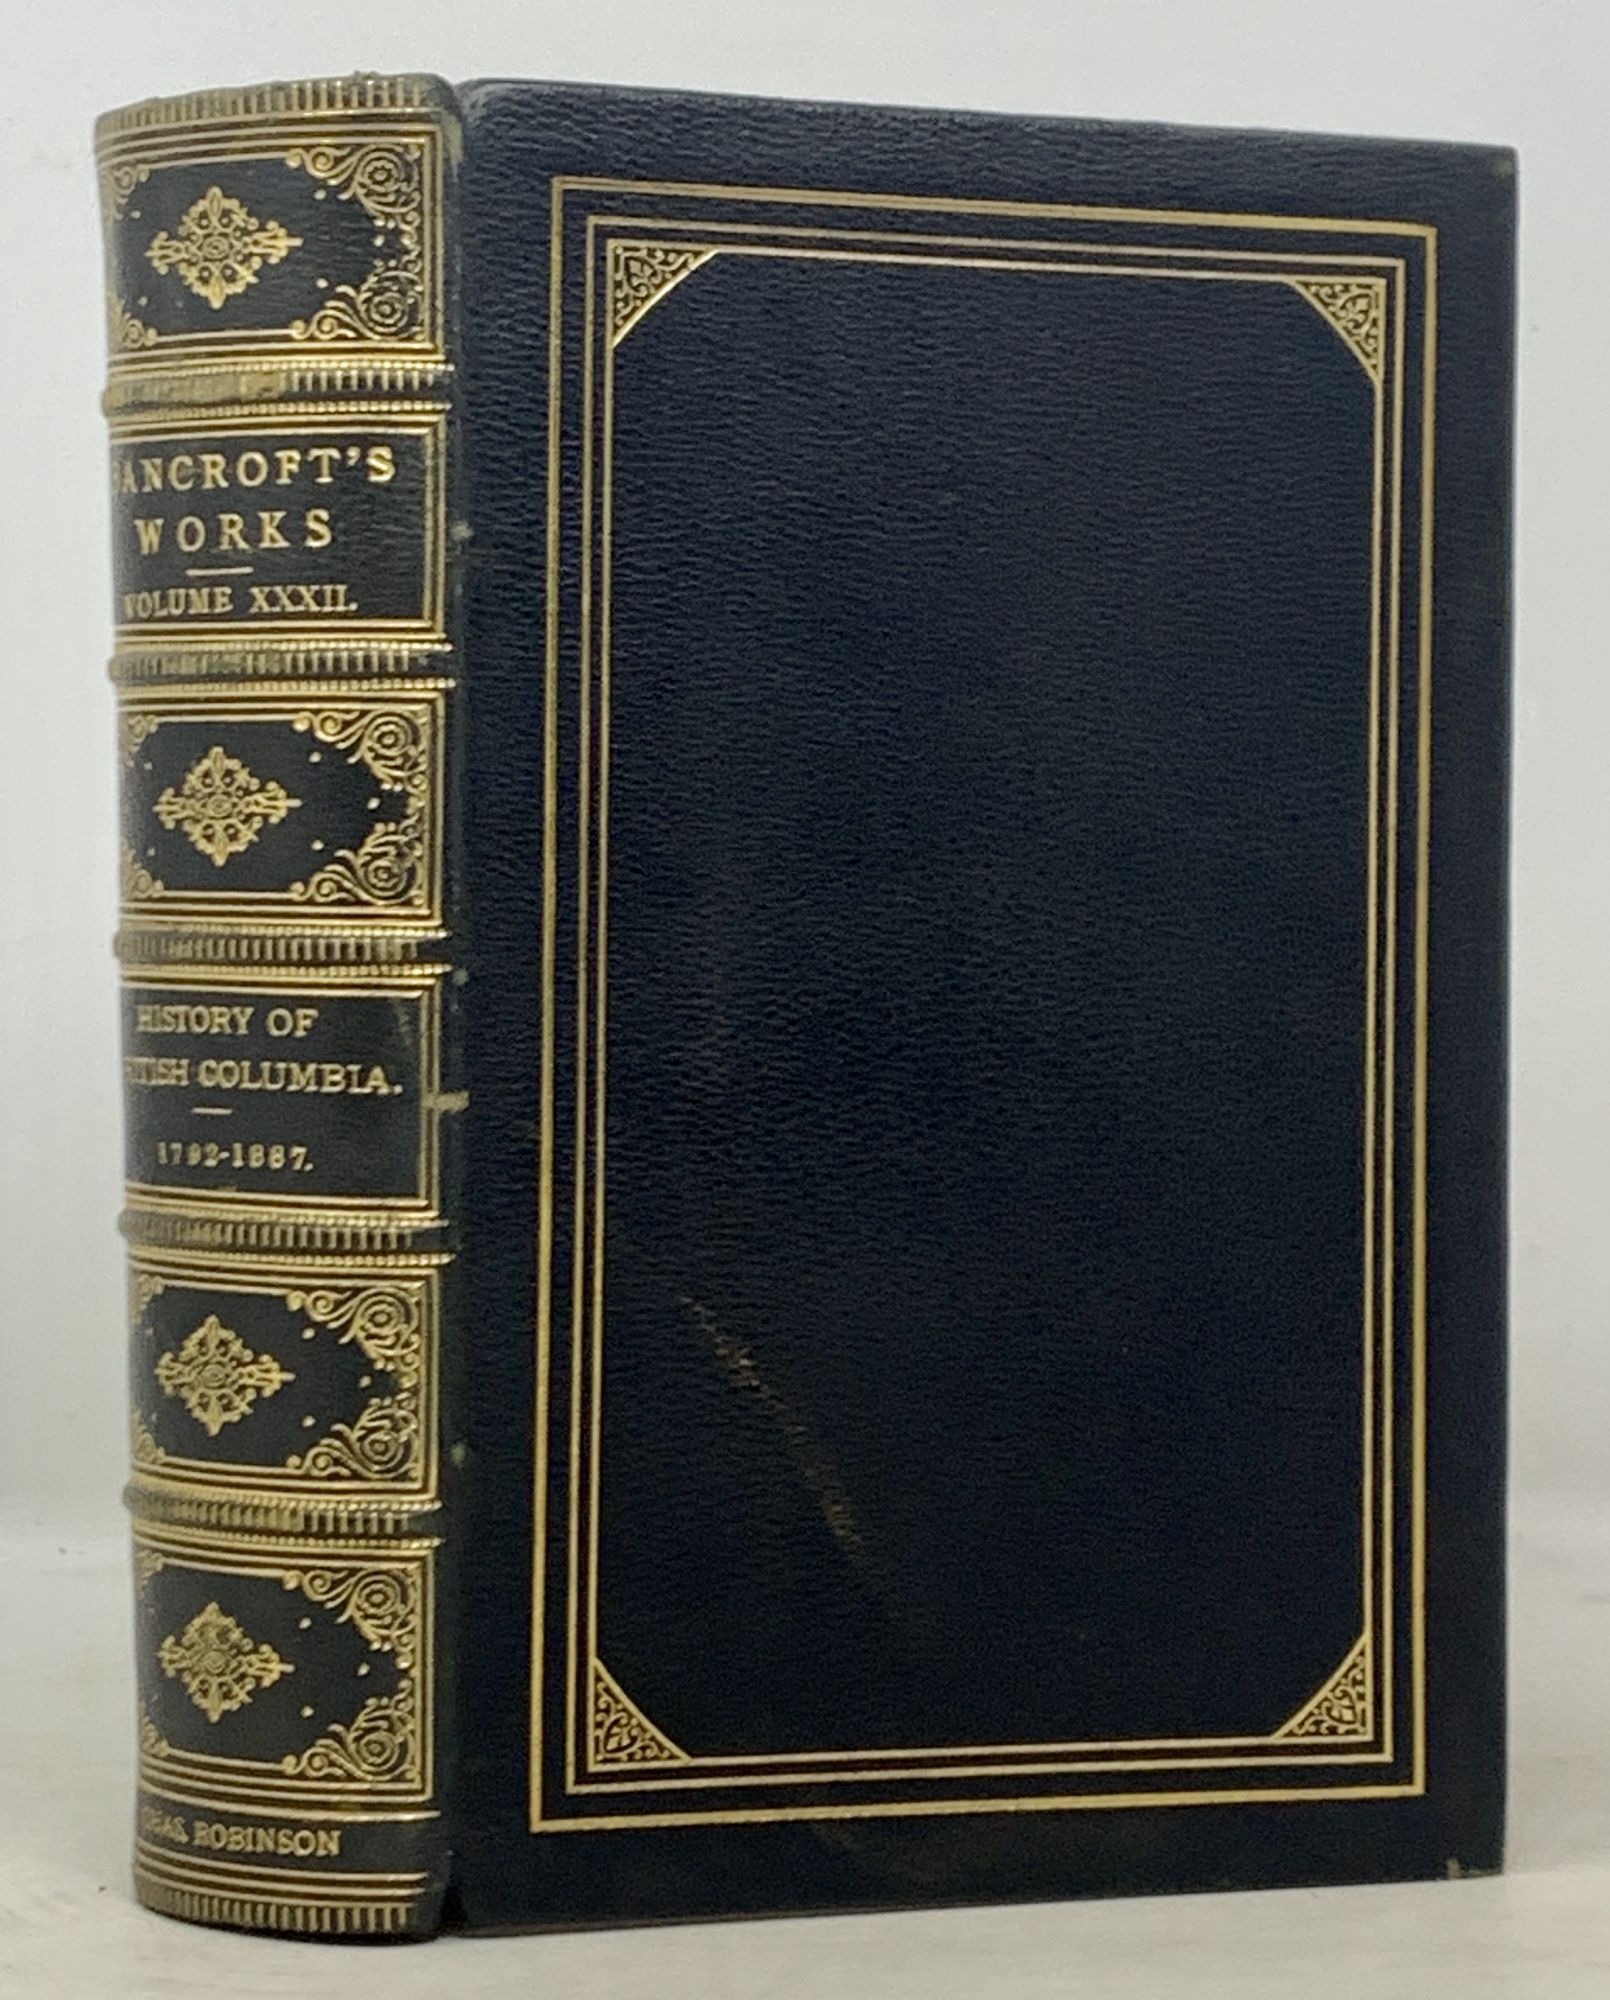 Bancroft, Hubert Howe [1832 - 1918]. Robinson, Charles - Former Owner - HISTORY Of BRITISH COLUMBIA. The Works of Hubert Howe Bancroft. Volume XXXII